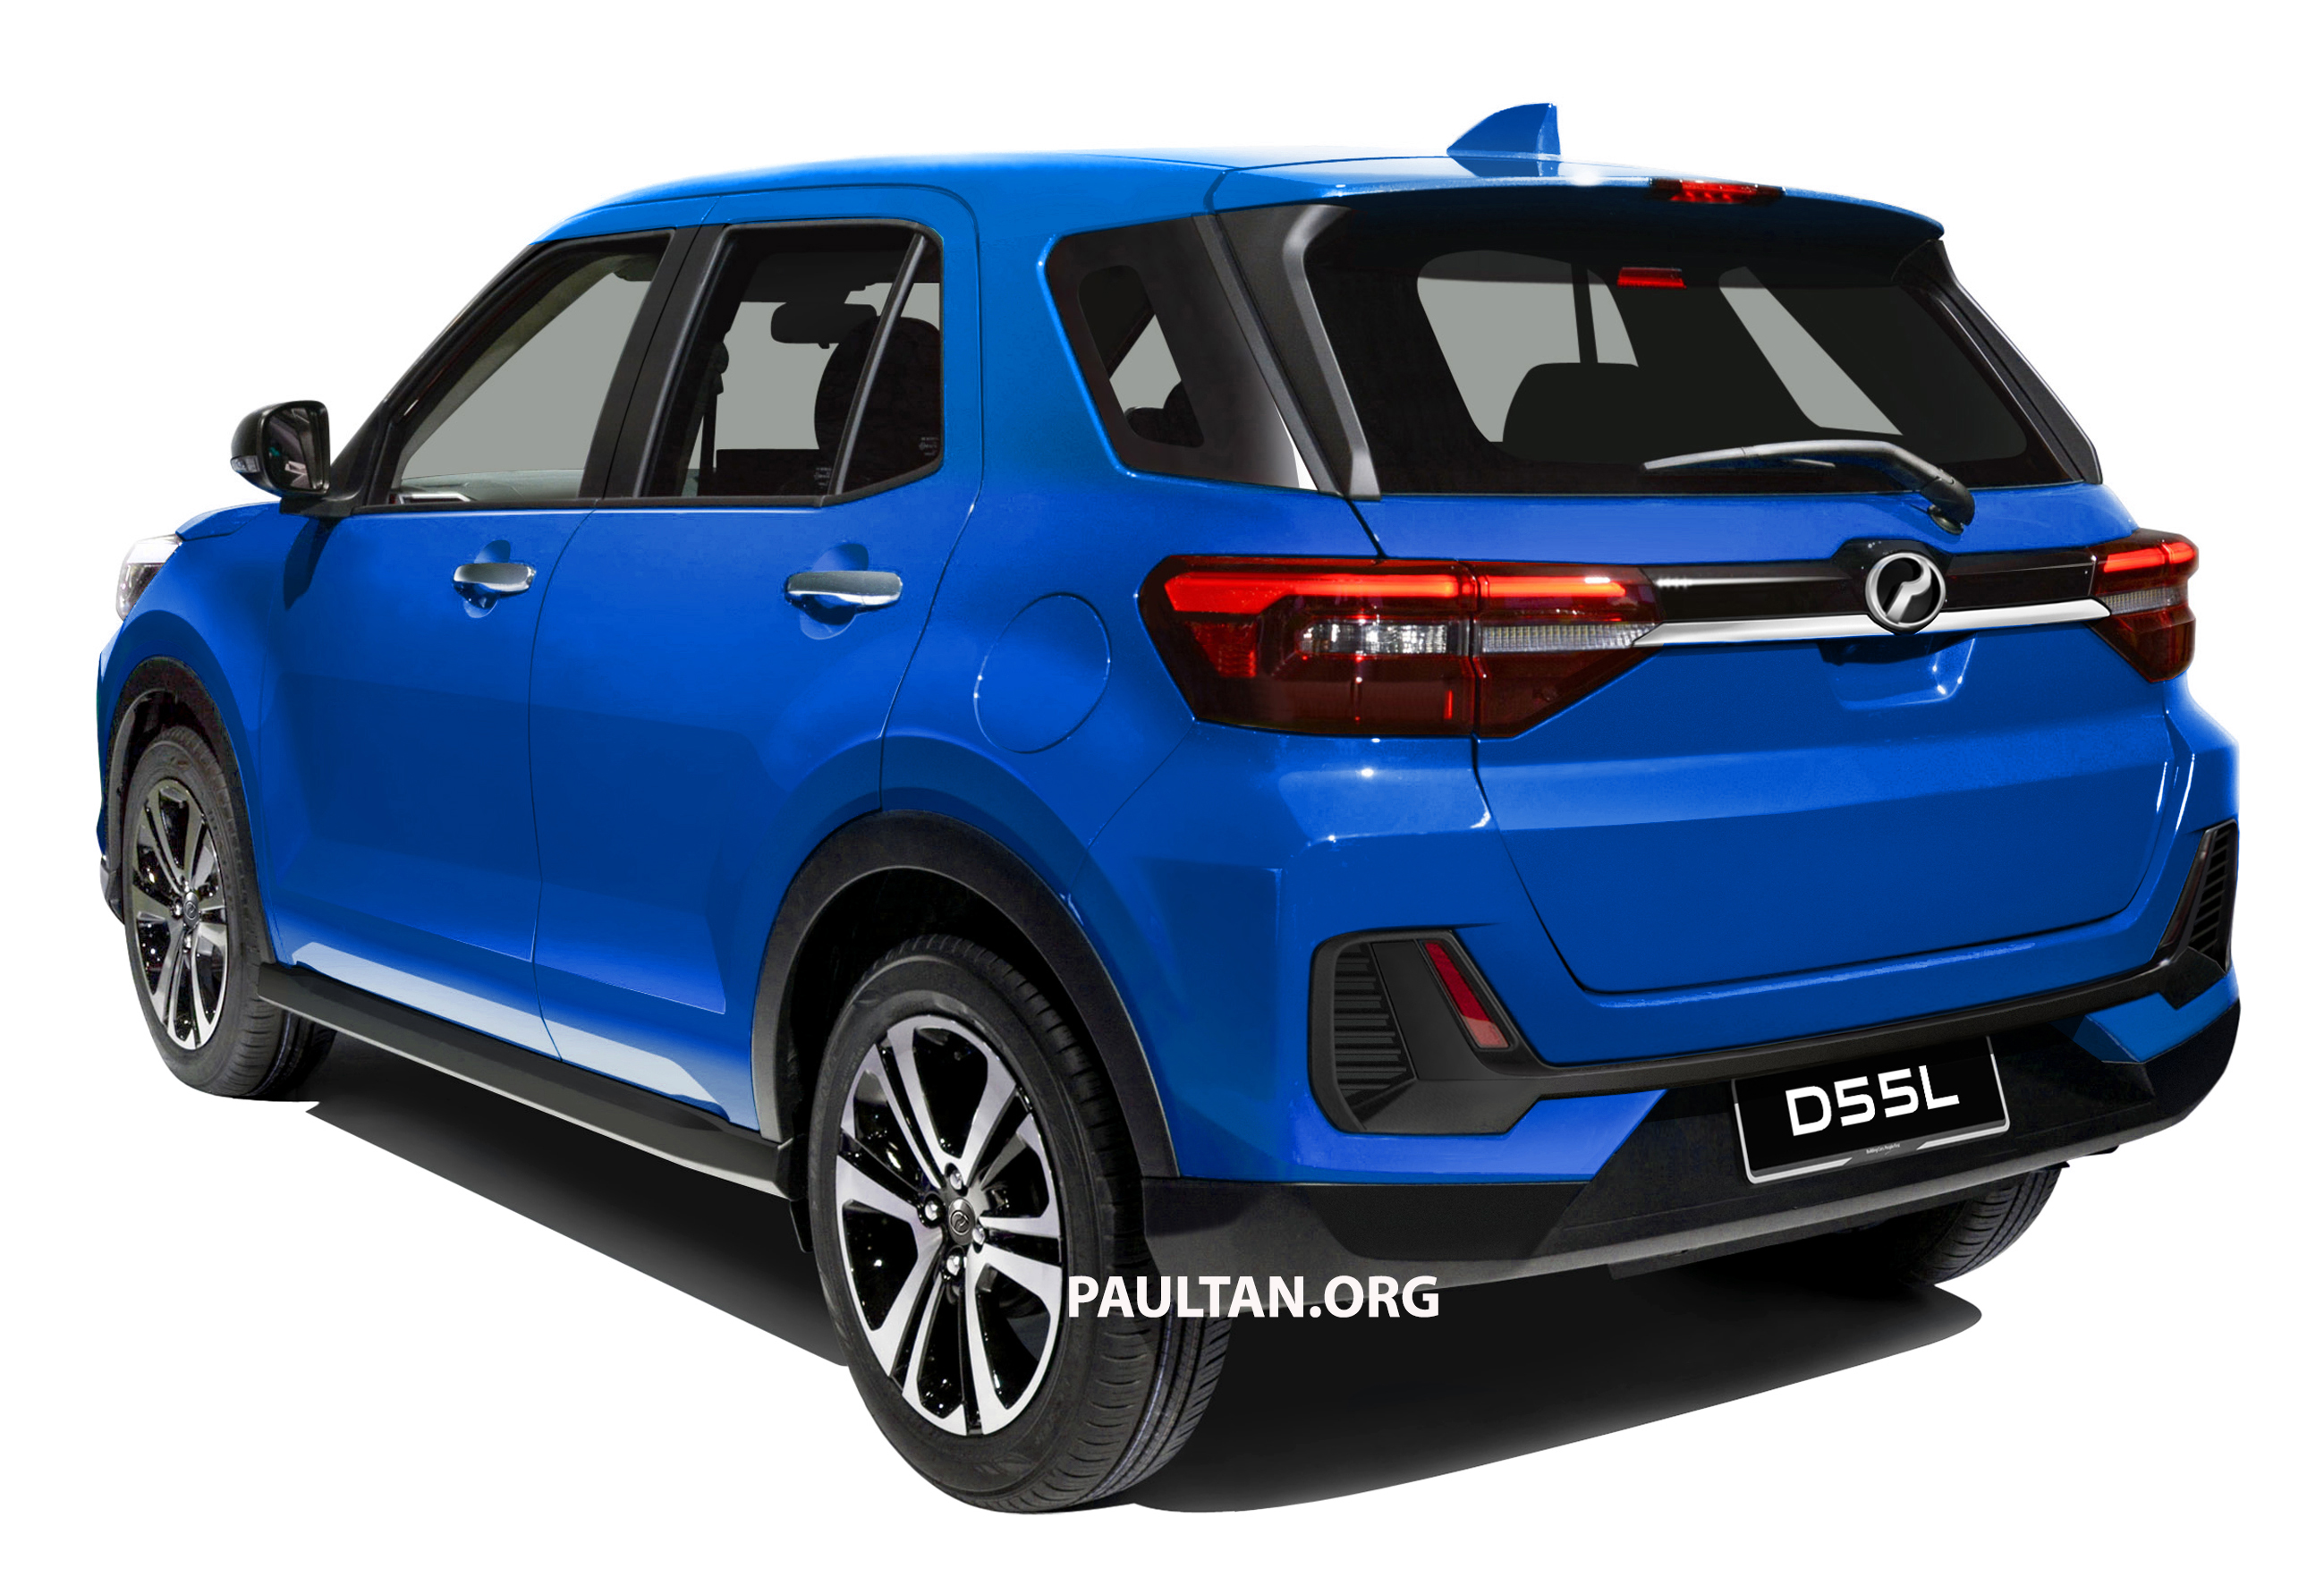 Upcoming Perodua D55L model rendered based on Daihatsu's 